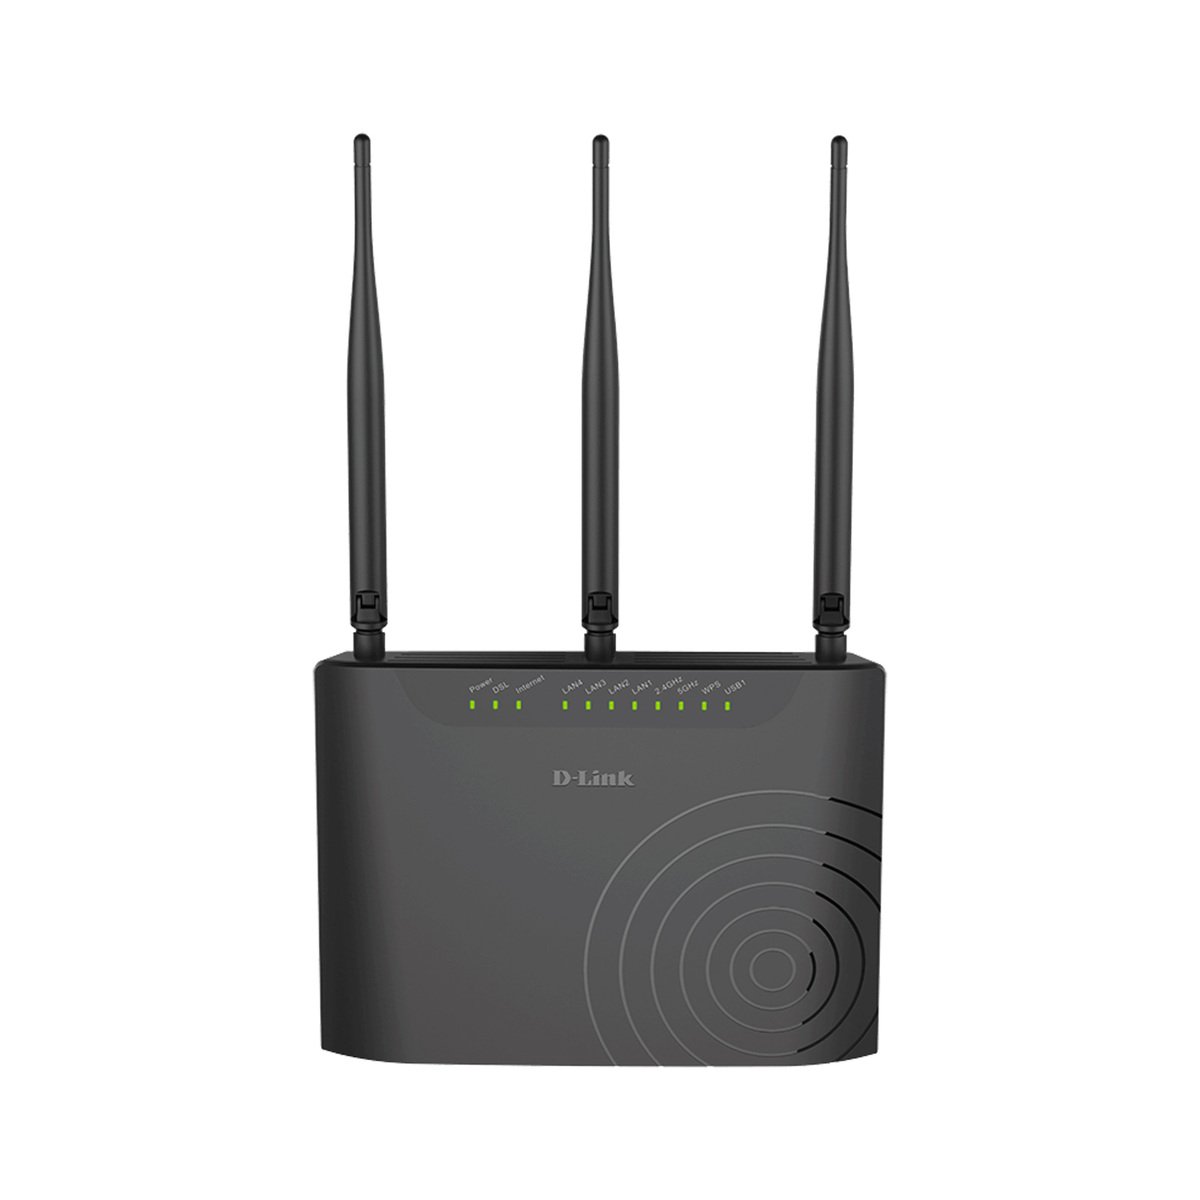 D-Link Dual Band Wireless AC750 VDSL2+/ADSL2+ Modem Router DSL-2877AL